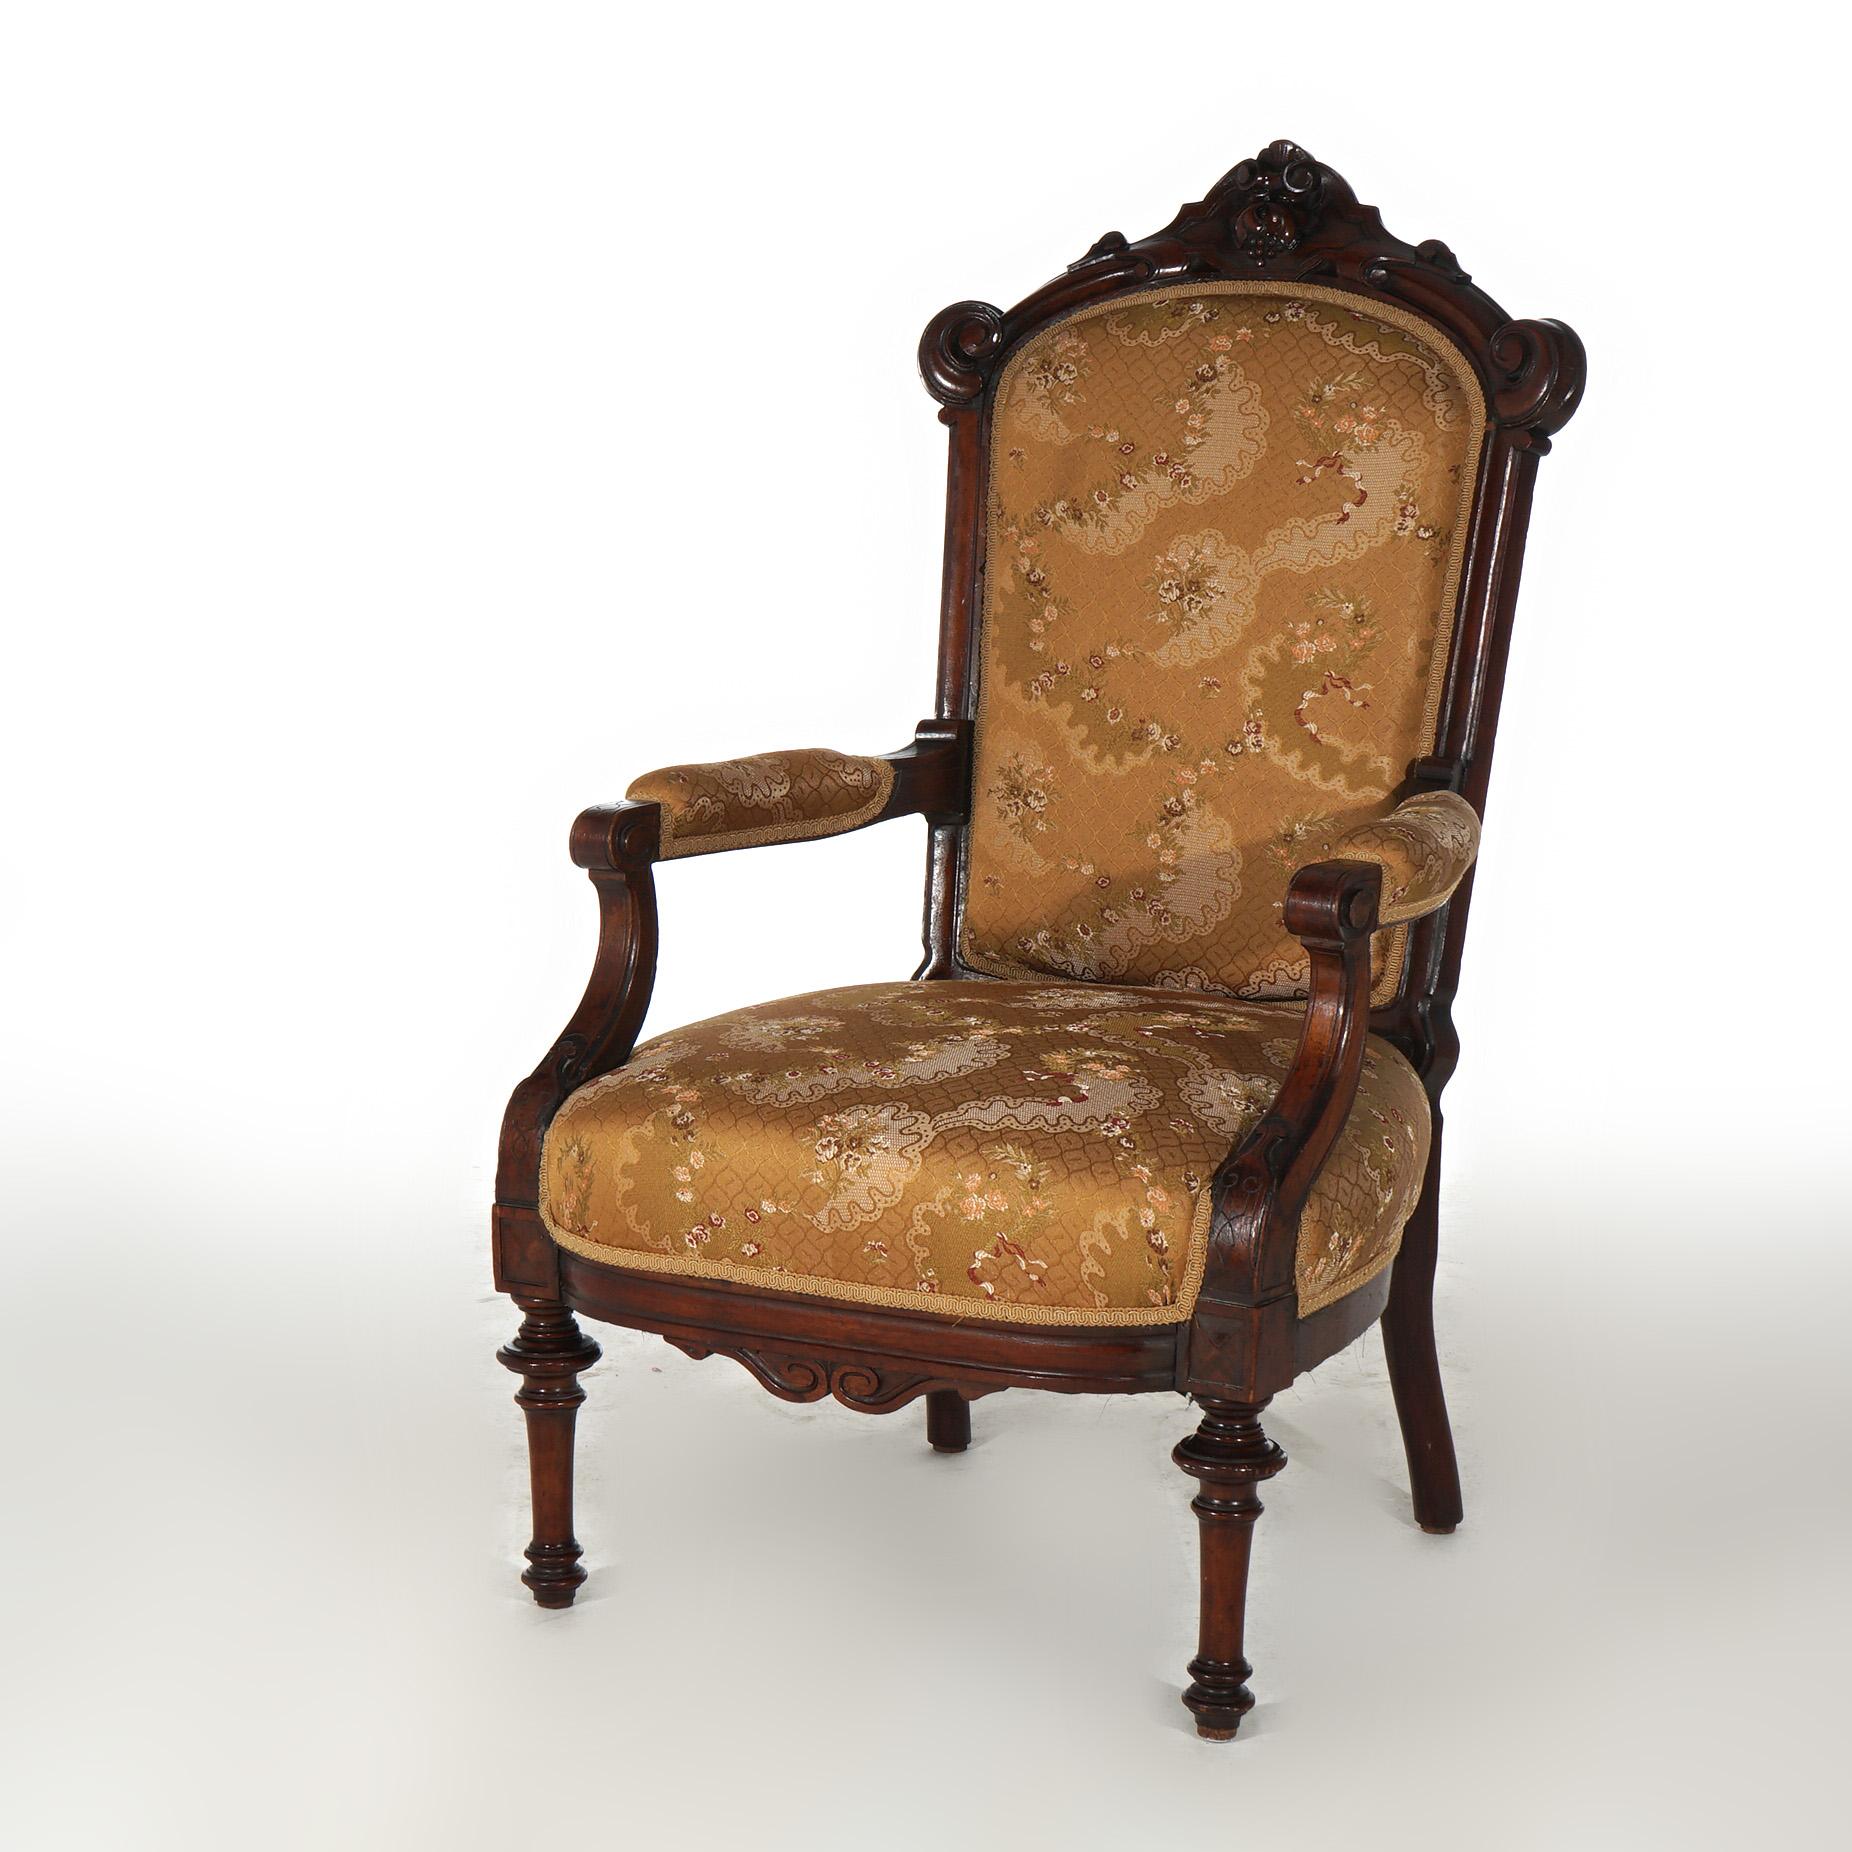 Renaissance Revival Antique Victorian Carved Walnut Upholstered Gentleman’s Chair C1890 For Sale